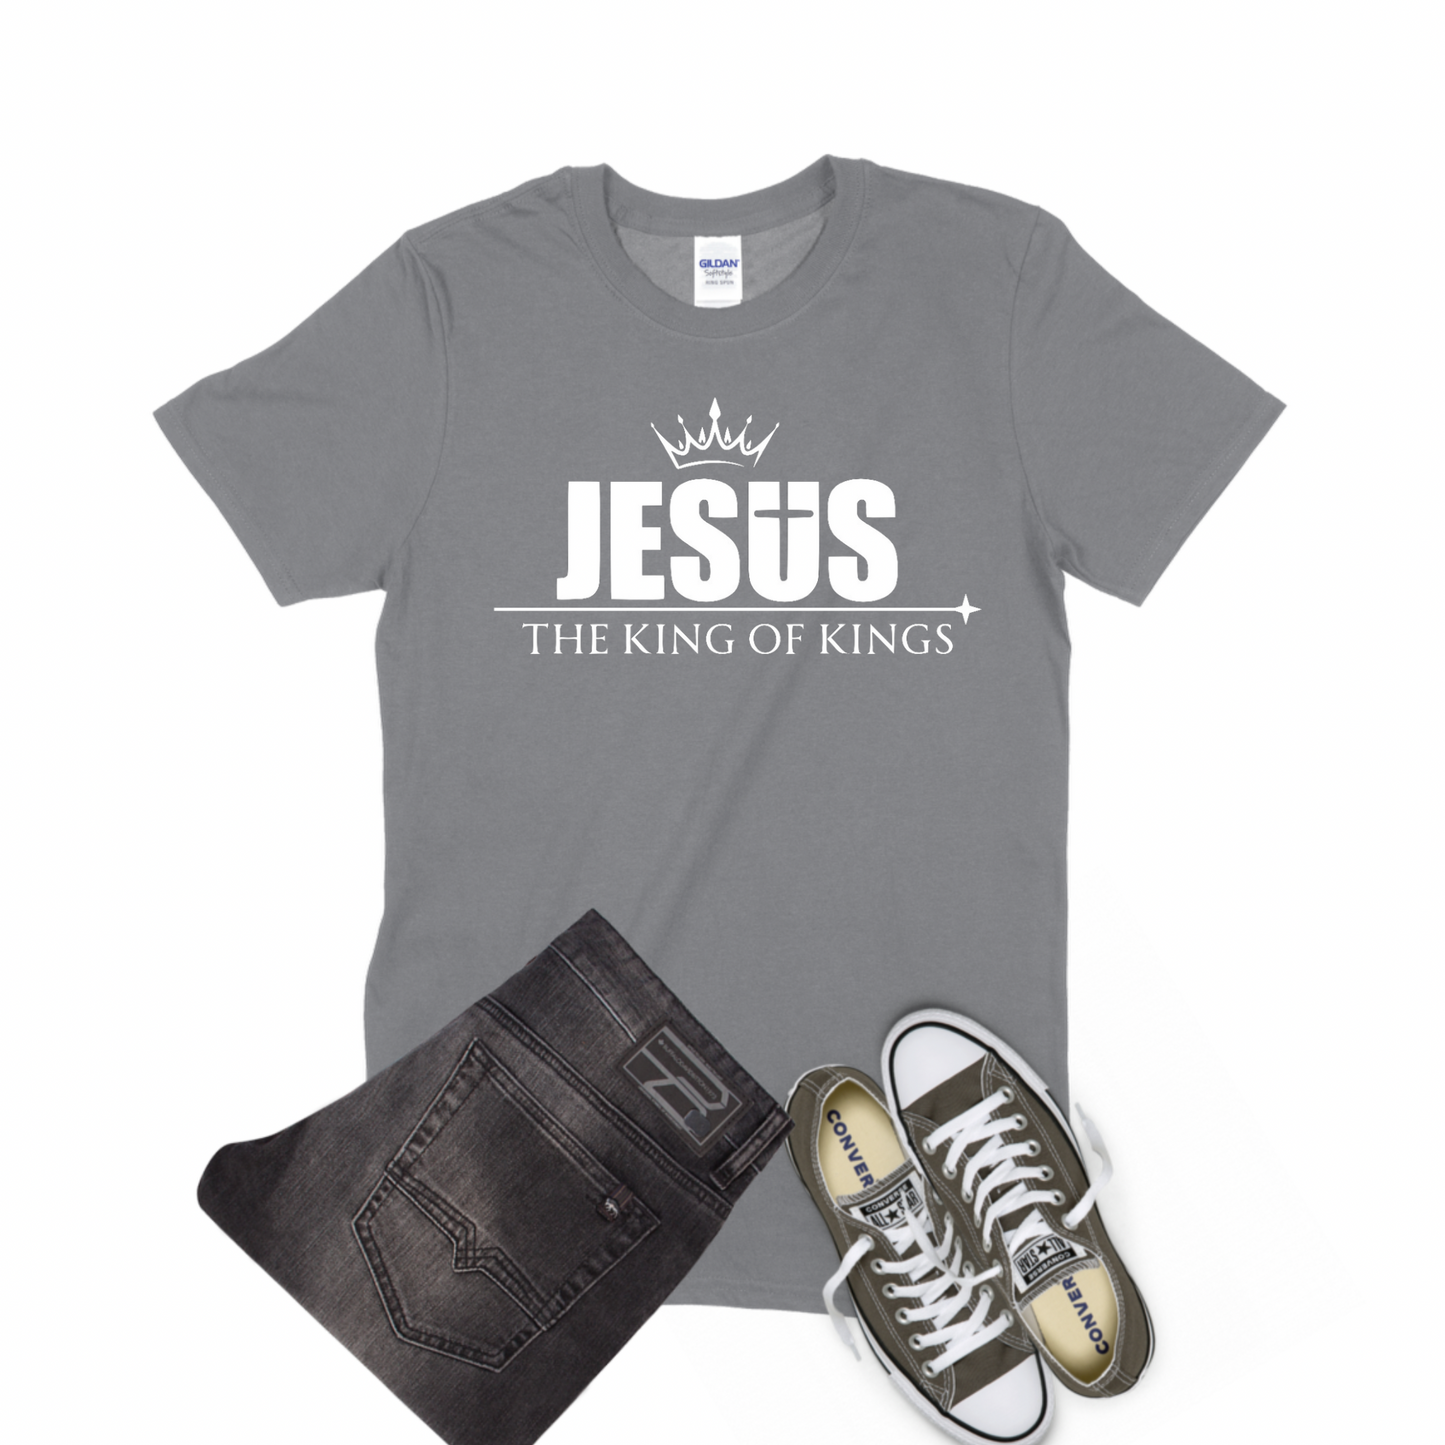 JESUS KING OF KINGS/Christian shirt/Bibble verse shirt/ Religious Shirt